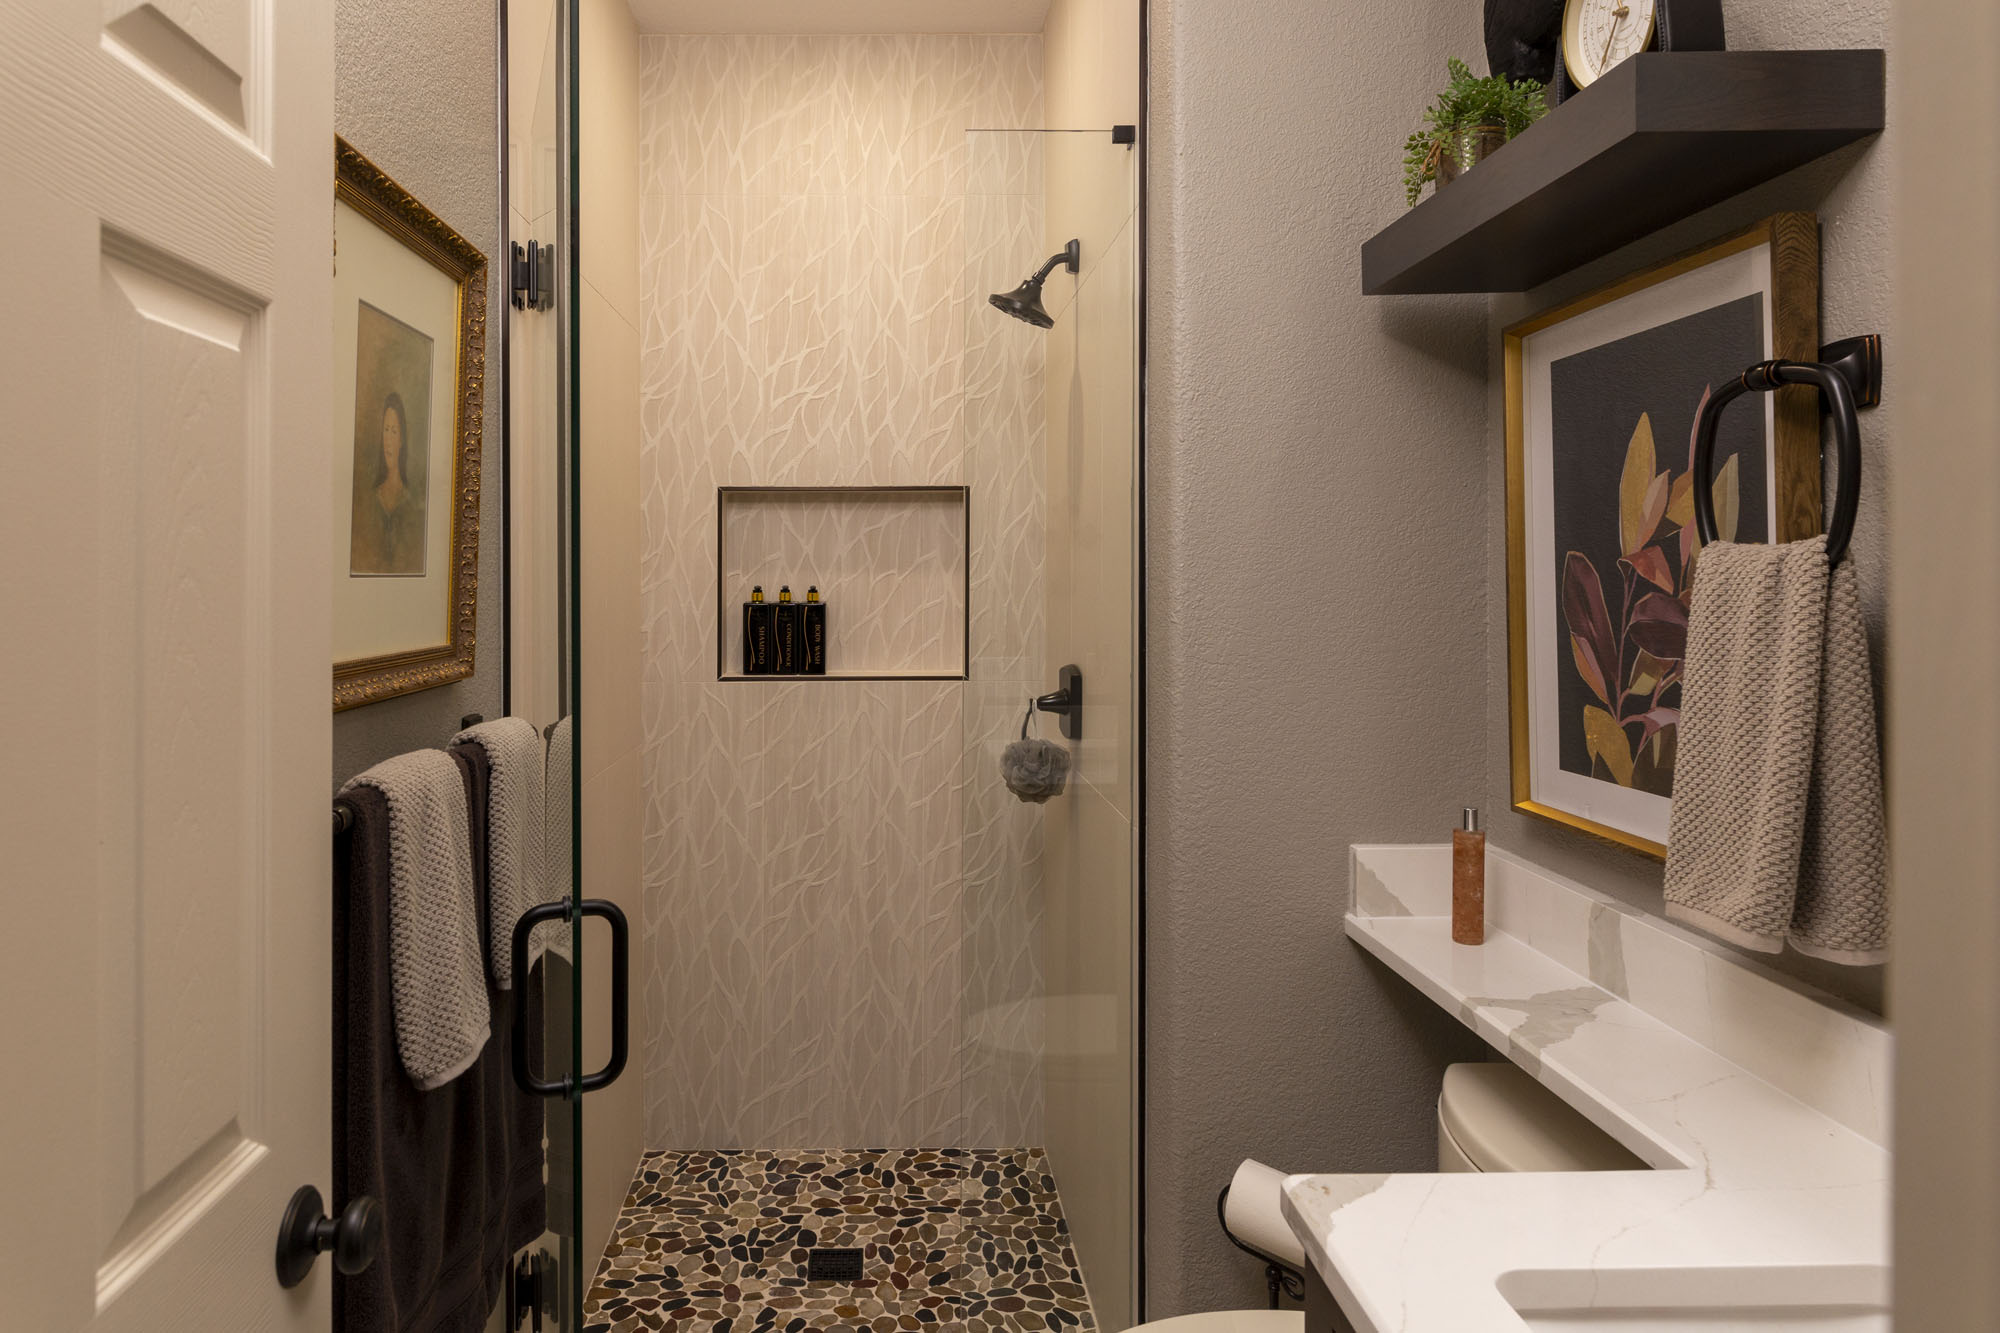 Trasitional Bathroom Design - Guest Bathroom Remodel